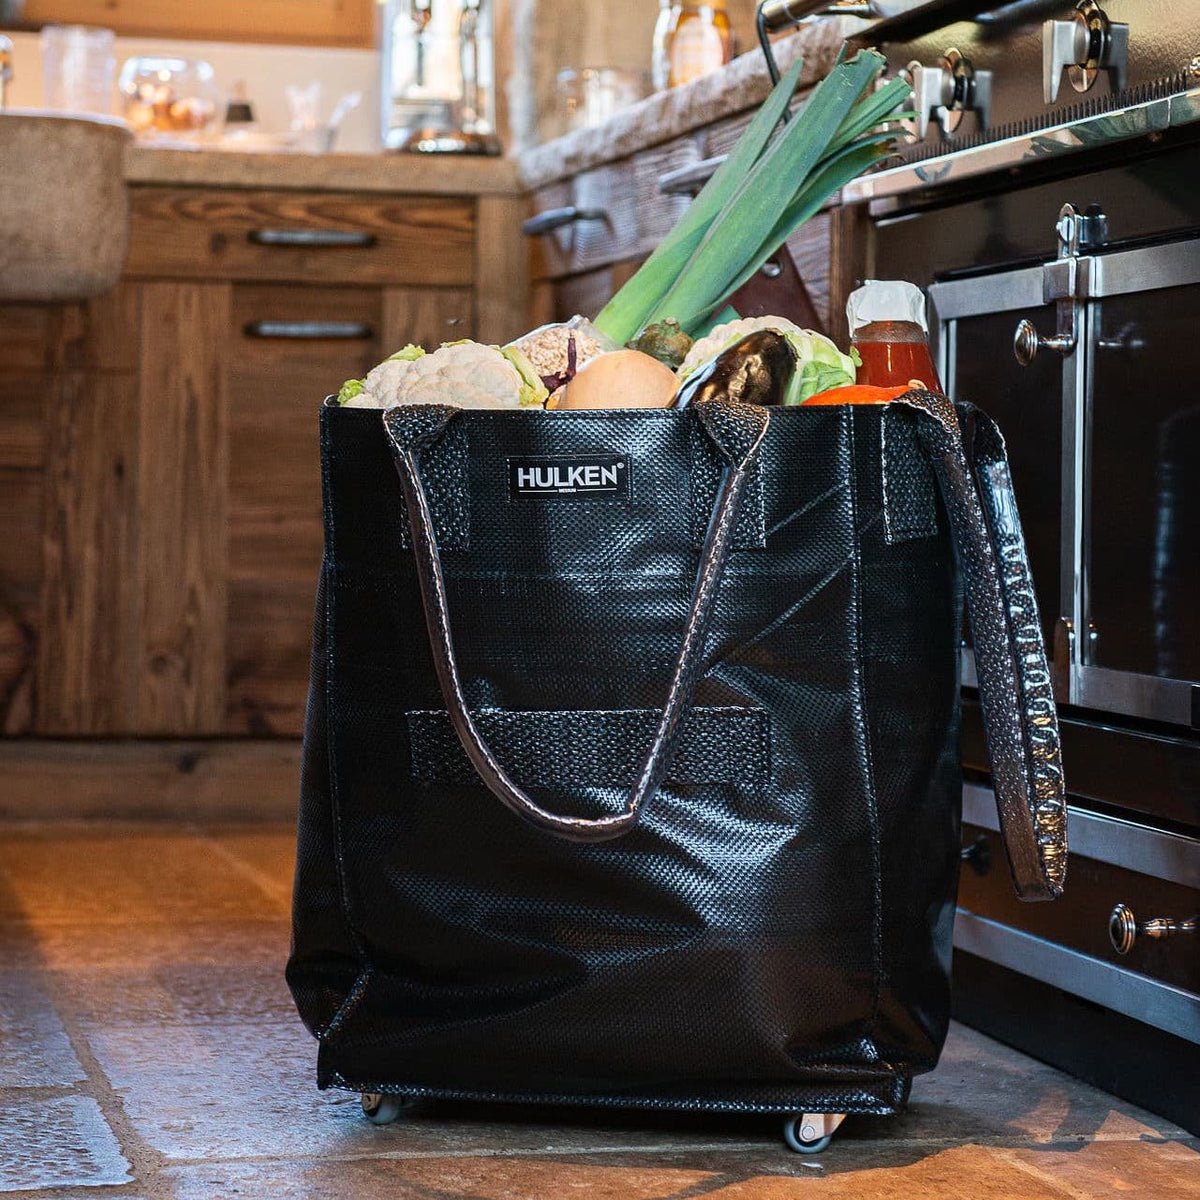 HULKEN ORIGINAL - bag on wheels for grocery- Hulken 